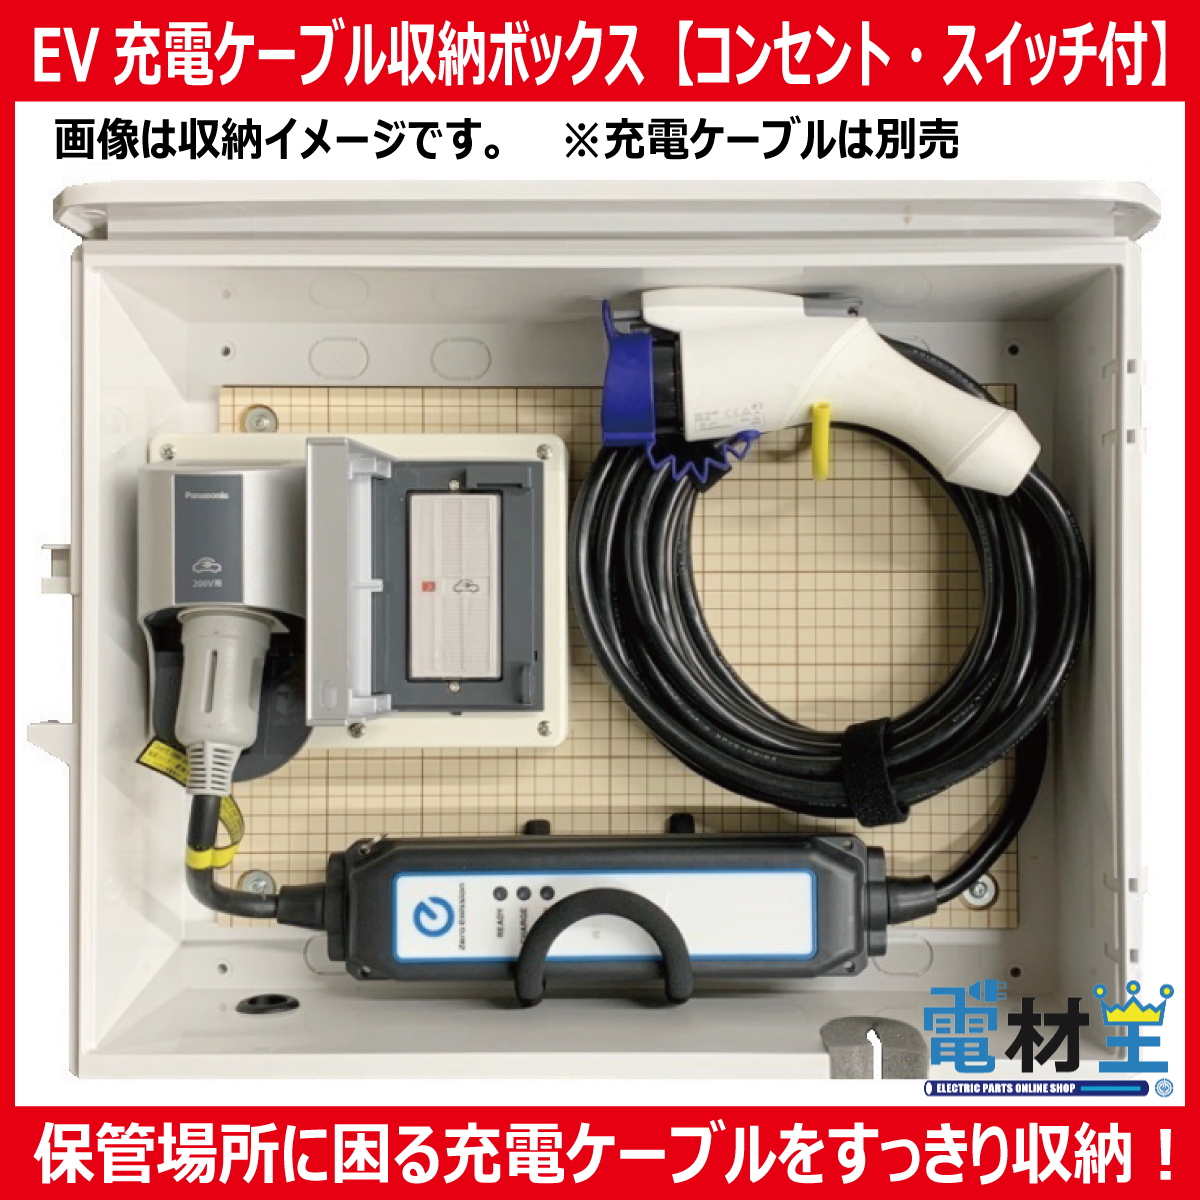 EV PHEV用 充電ケーブル収納ボックス コンセント スイッチ付 D-EVBOX54A-SC 電気自動車画像